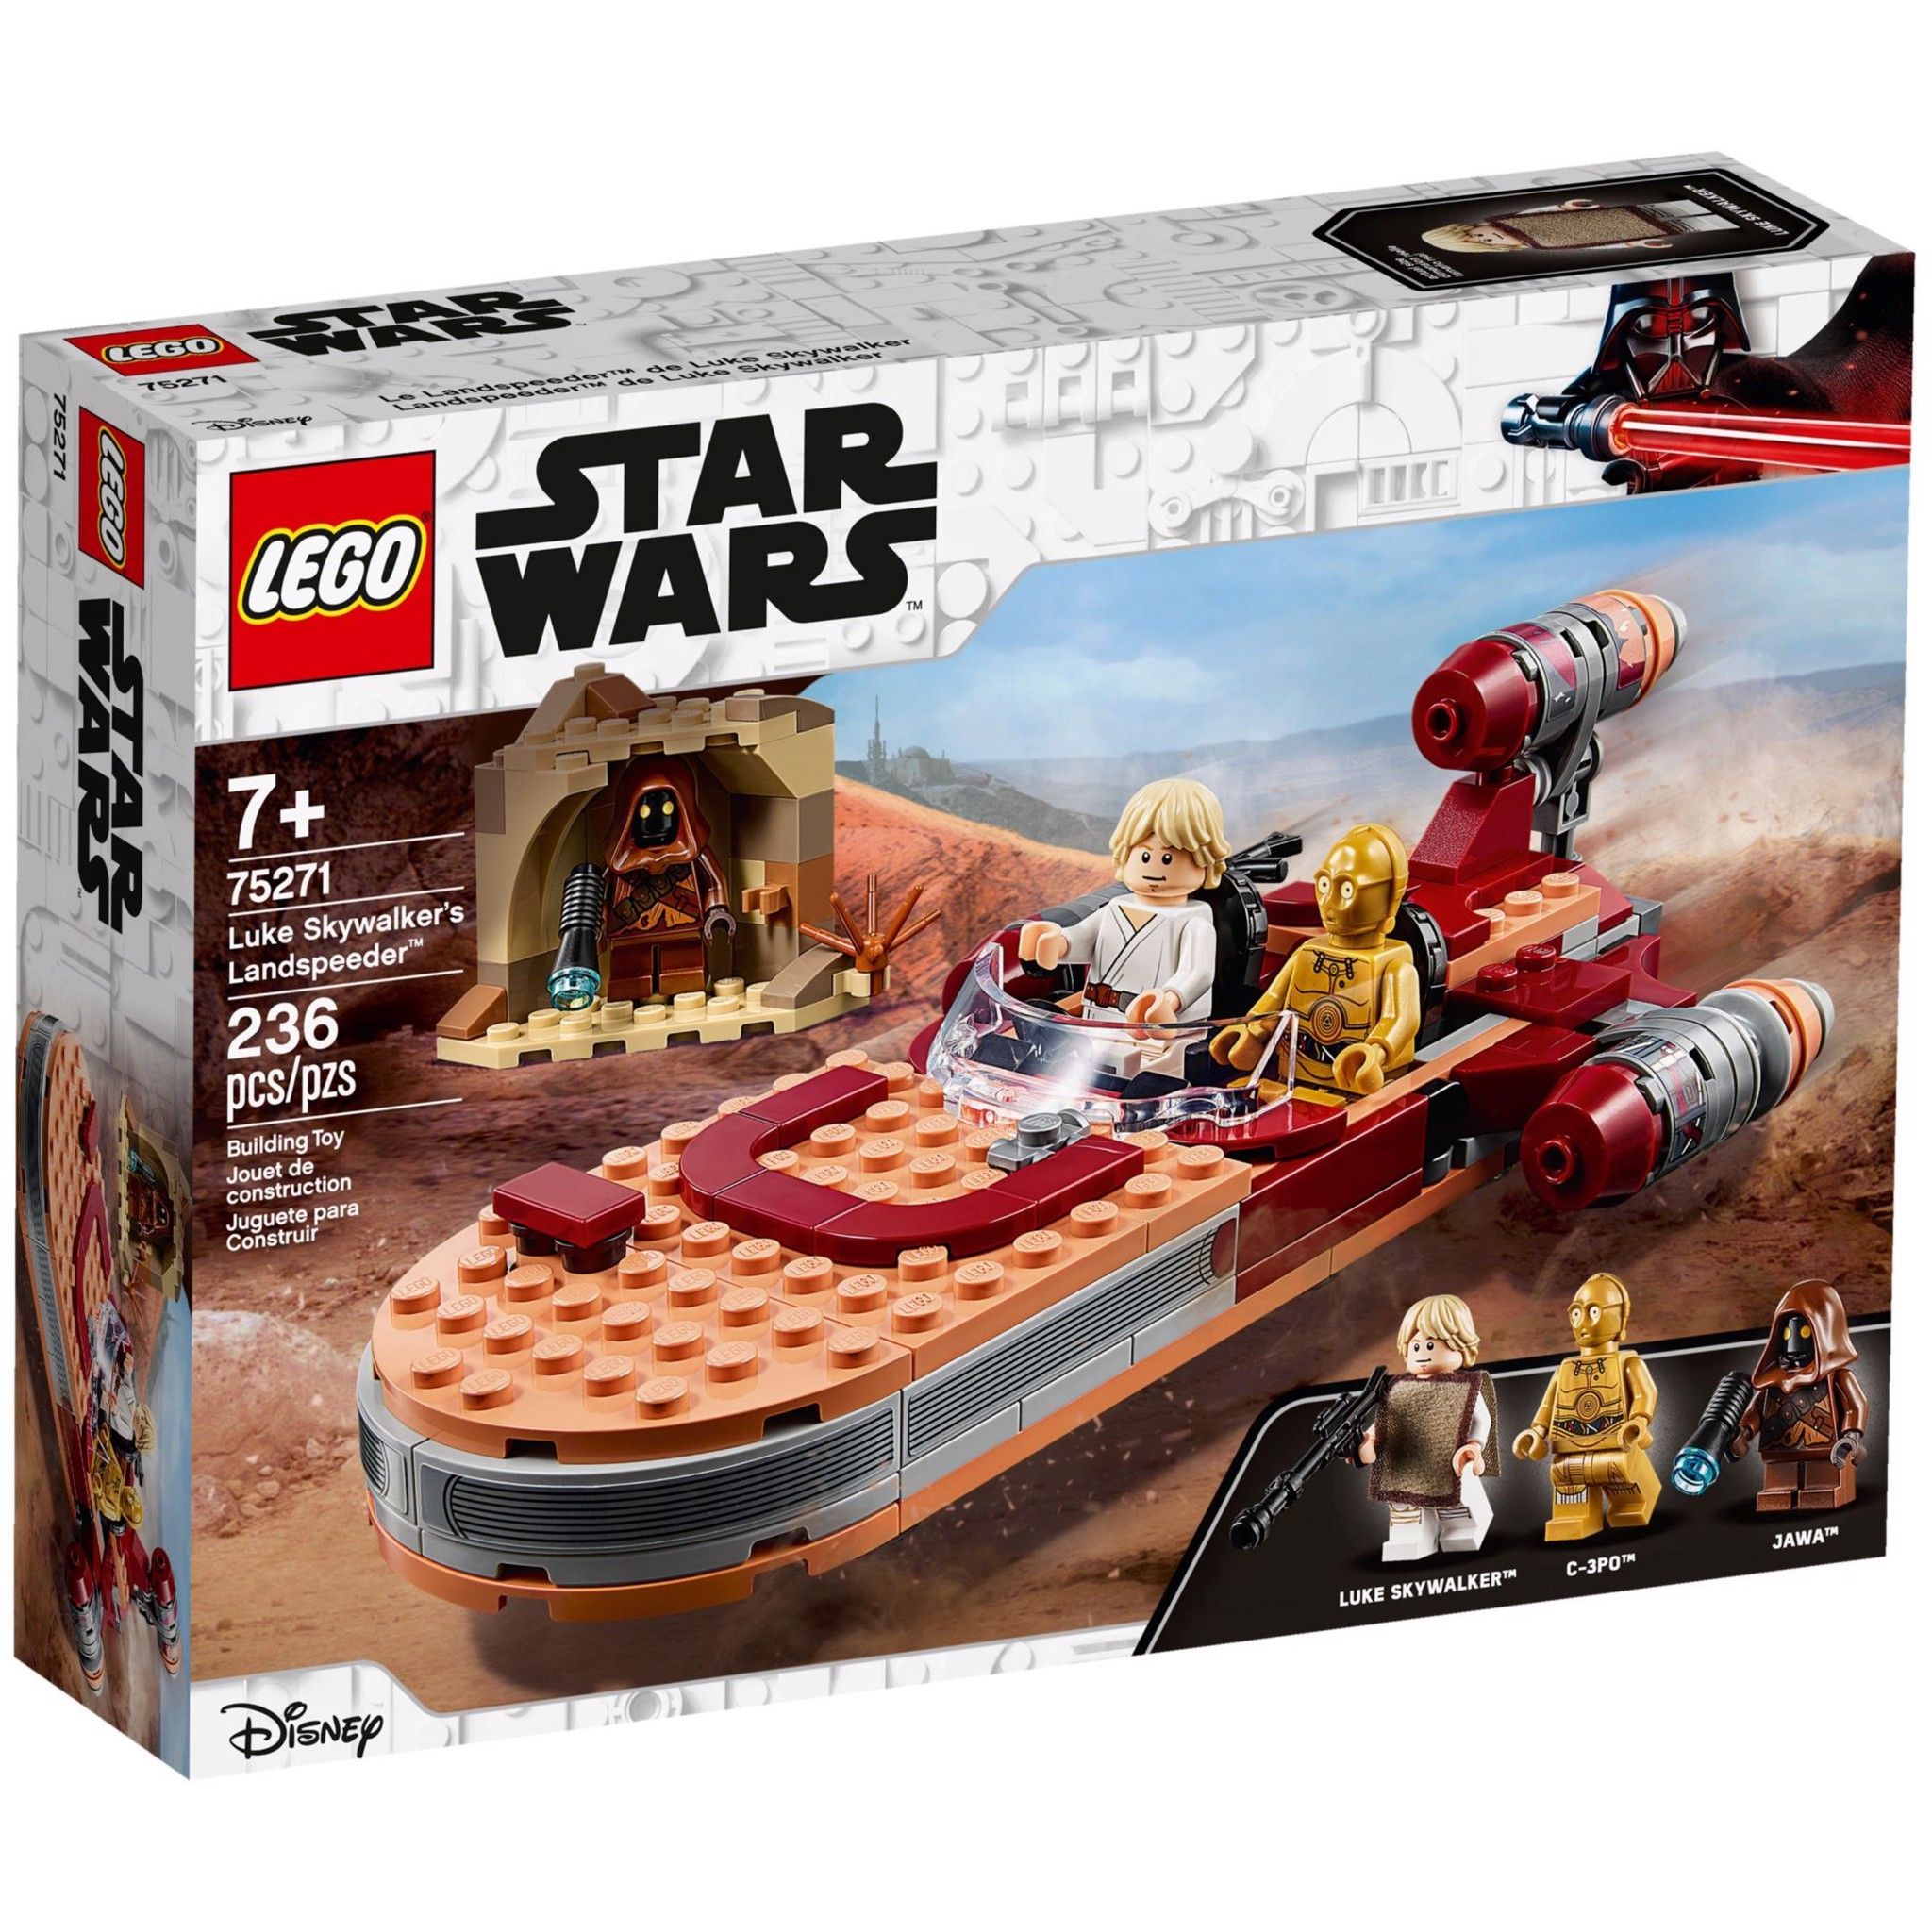 [HÀNG ĐẶT/ ORDER] LEGO Star Wars 75271 Luke Skywalker's Landspeeder